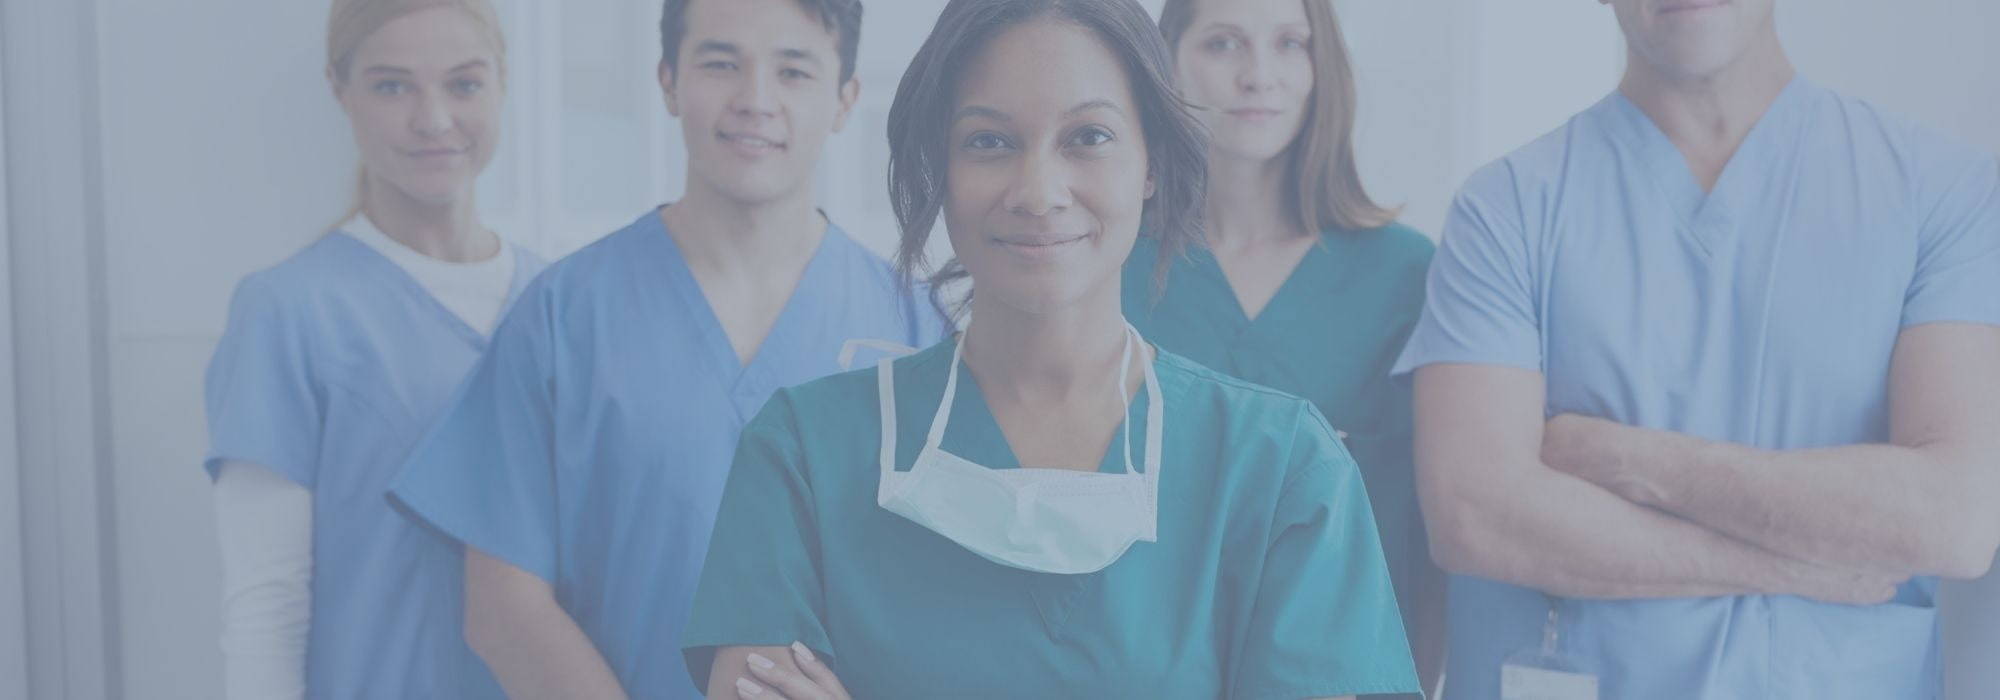 Nursing Jobs in the UK